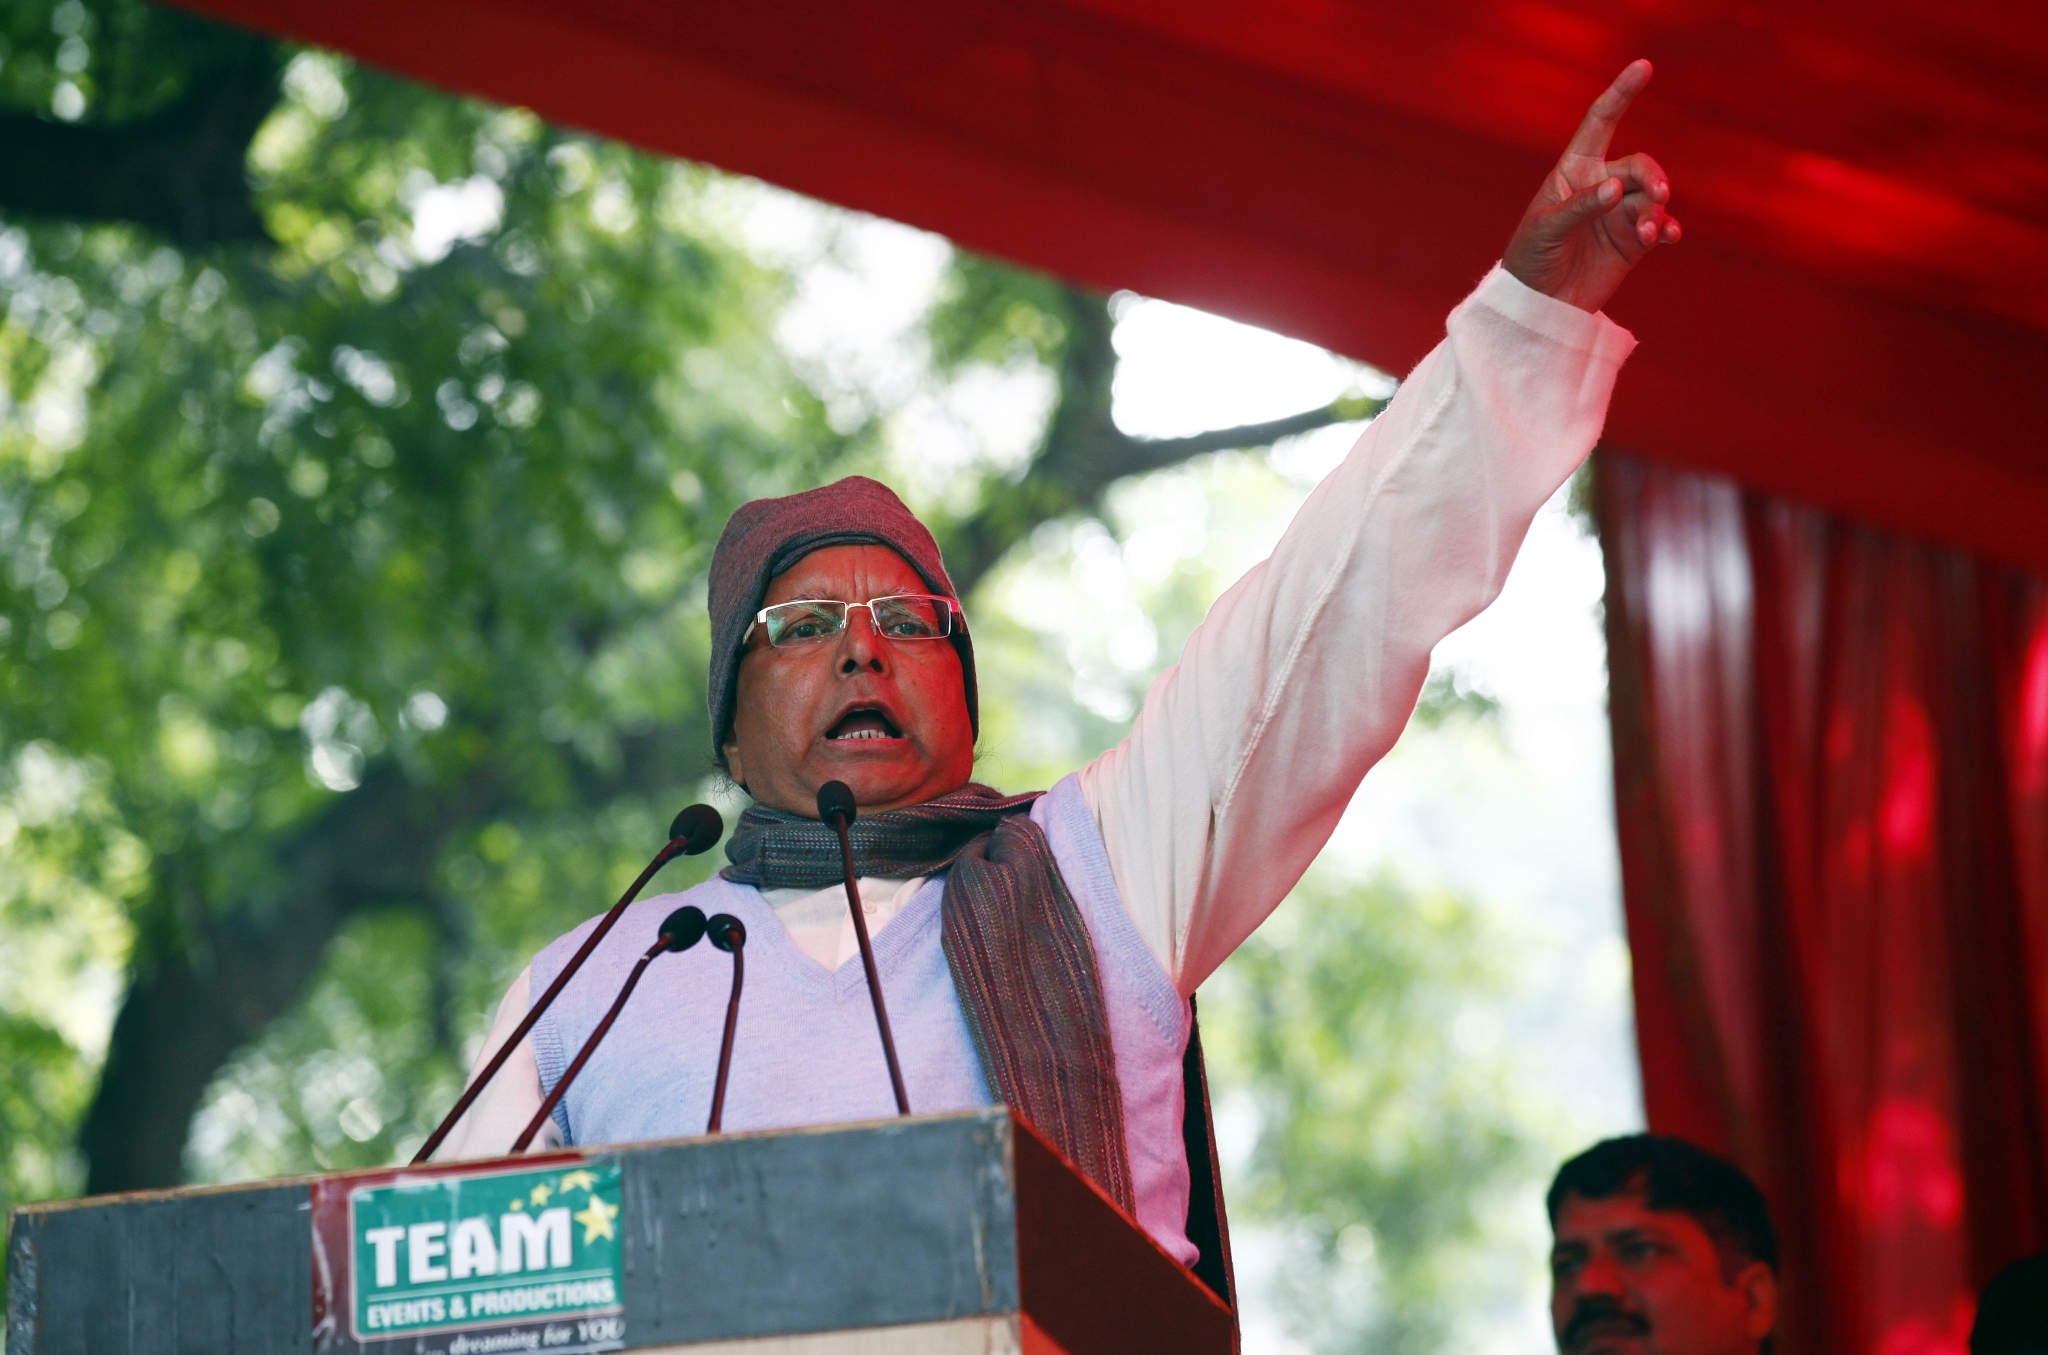 RJD supremo and former Bihar chief minister Lalu Prasad Yadav (Virendra Singh Gosain/Hindustan Times via Getty Images)